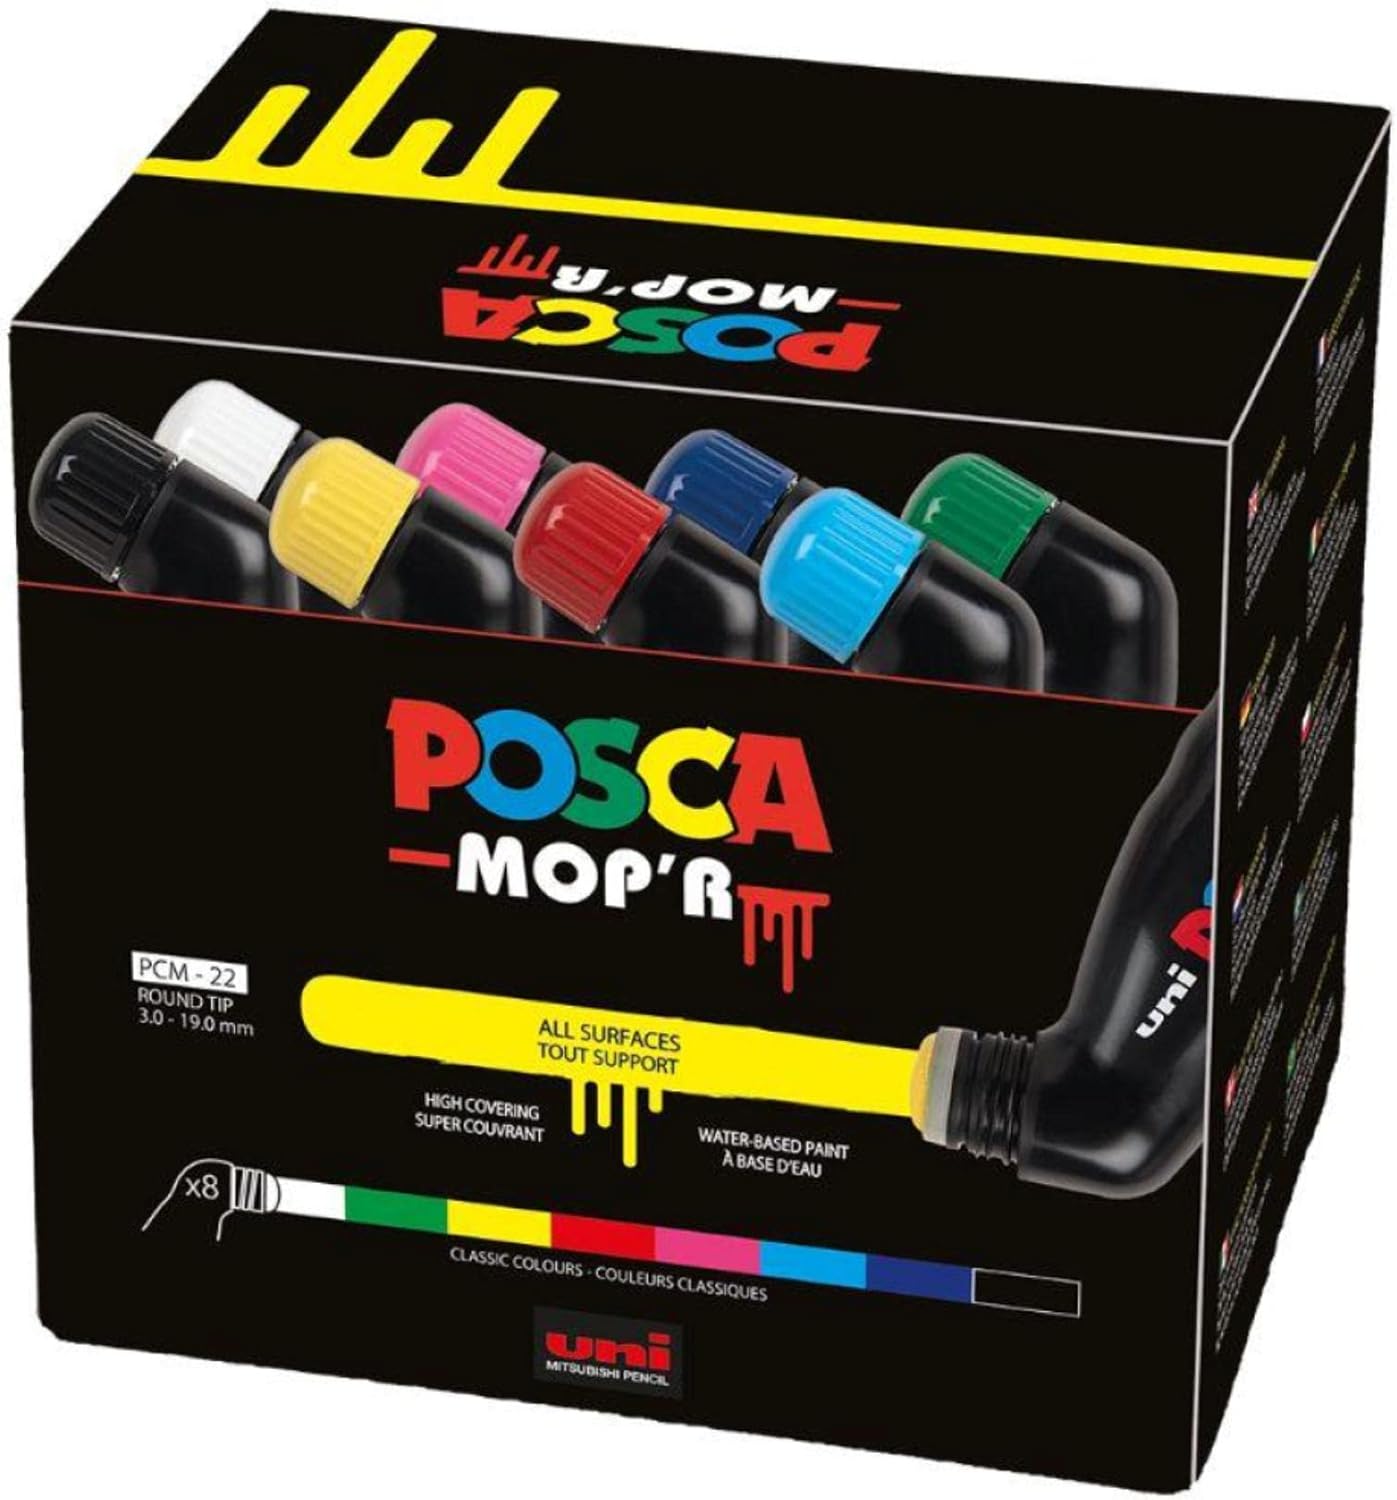 Multicolor Posca Markers Set, Mop'R Posca Paint Markers